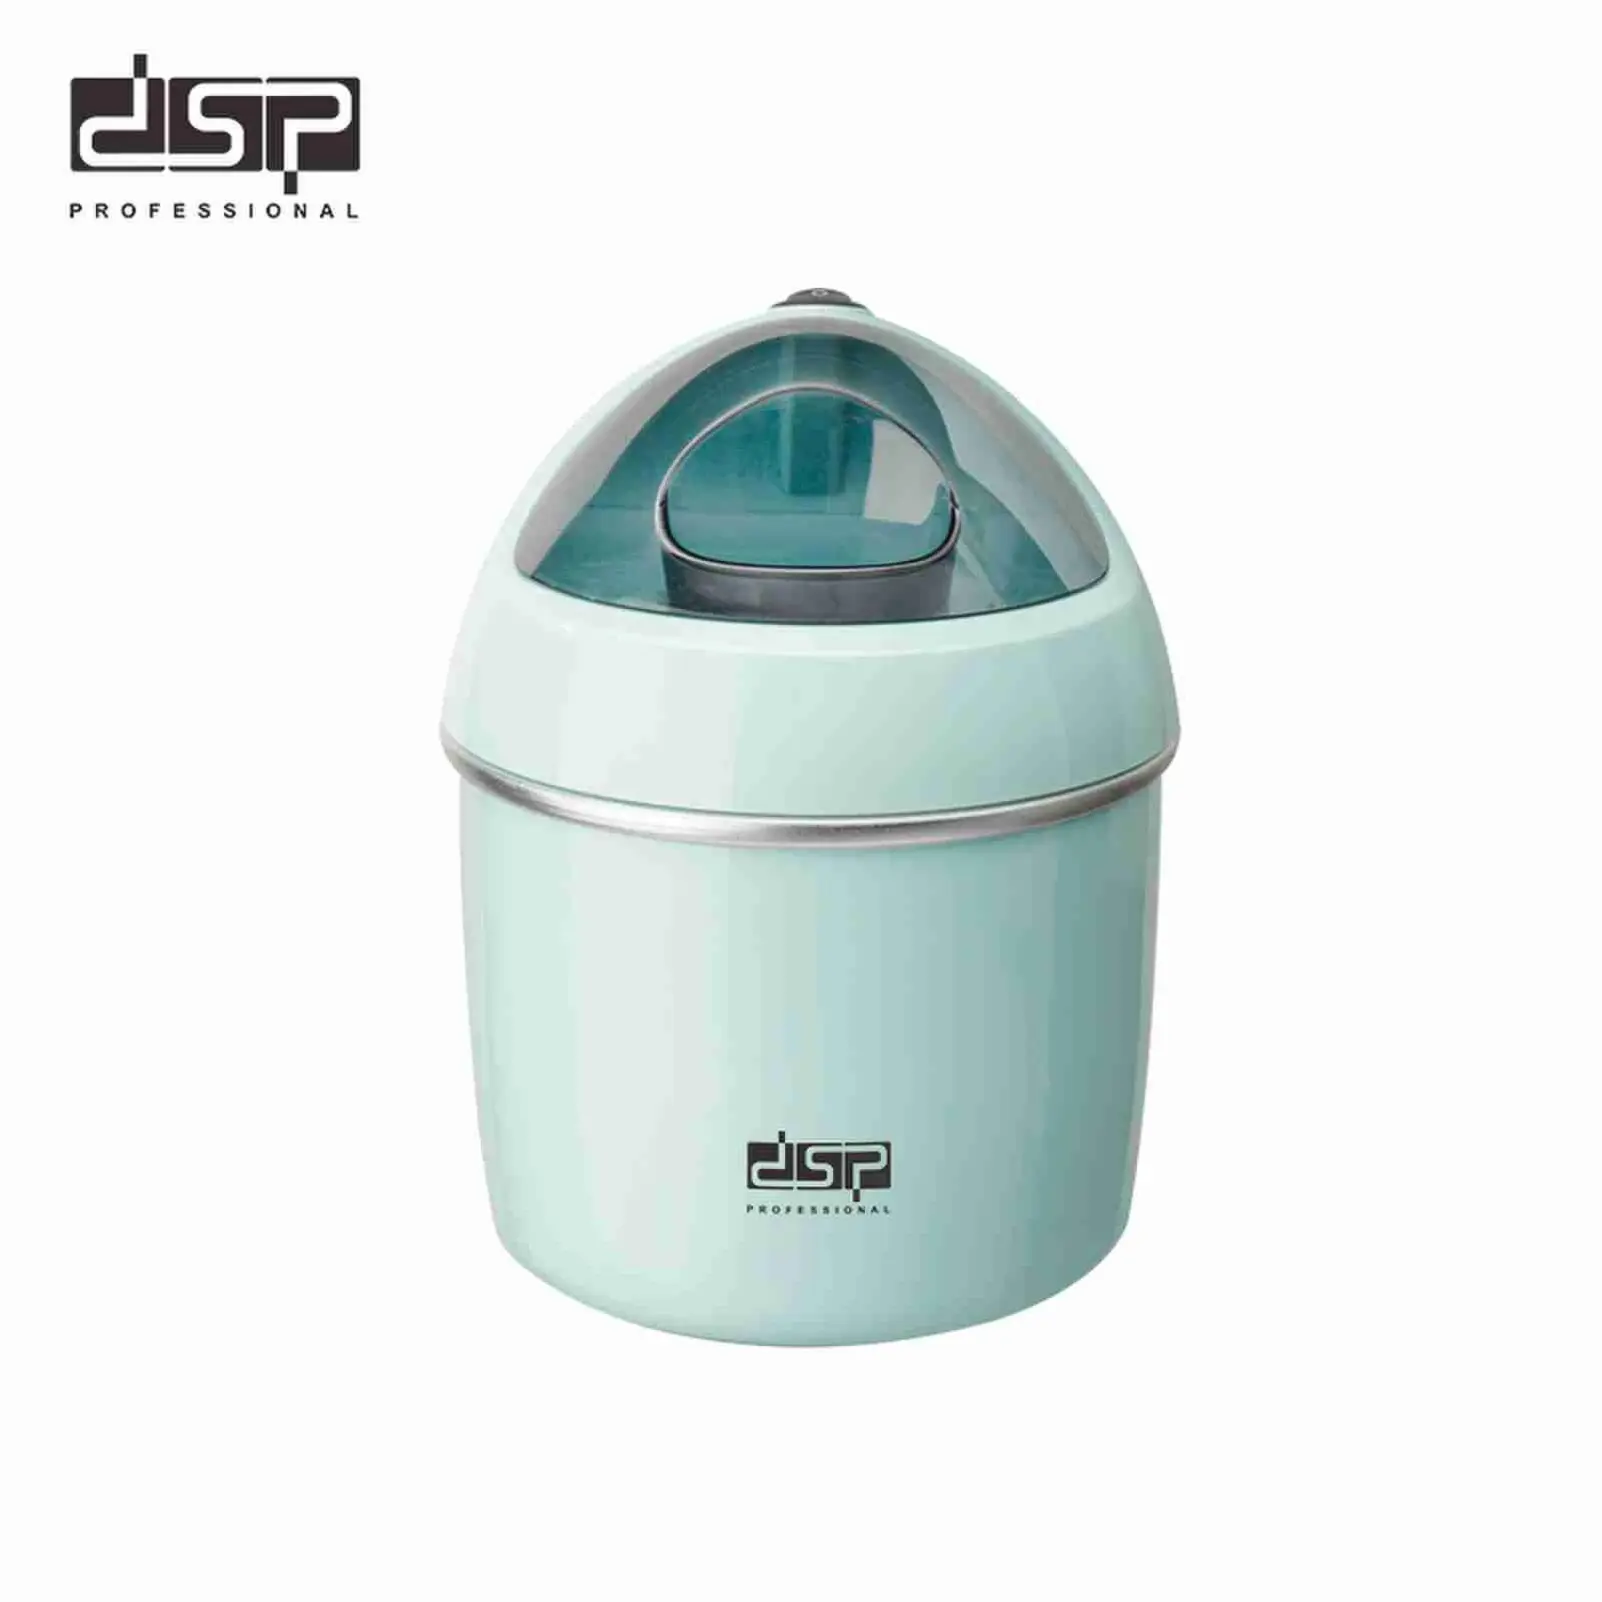 DSP Professional Mini Electric Yogurt Machine Home Automatic Production Of Ice Cream Yogurt